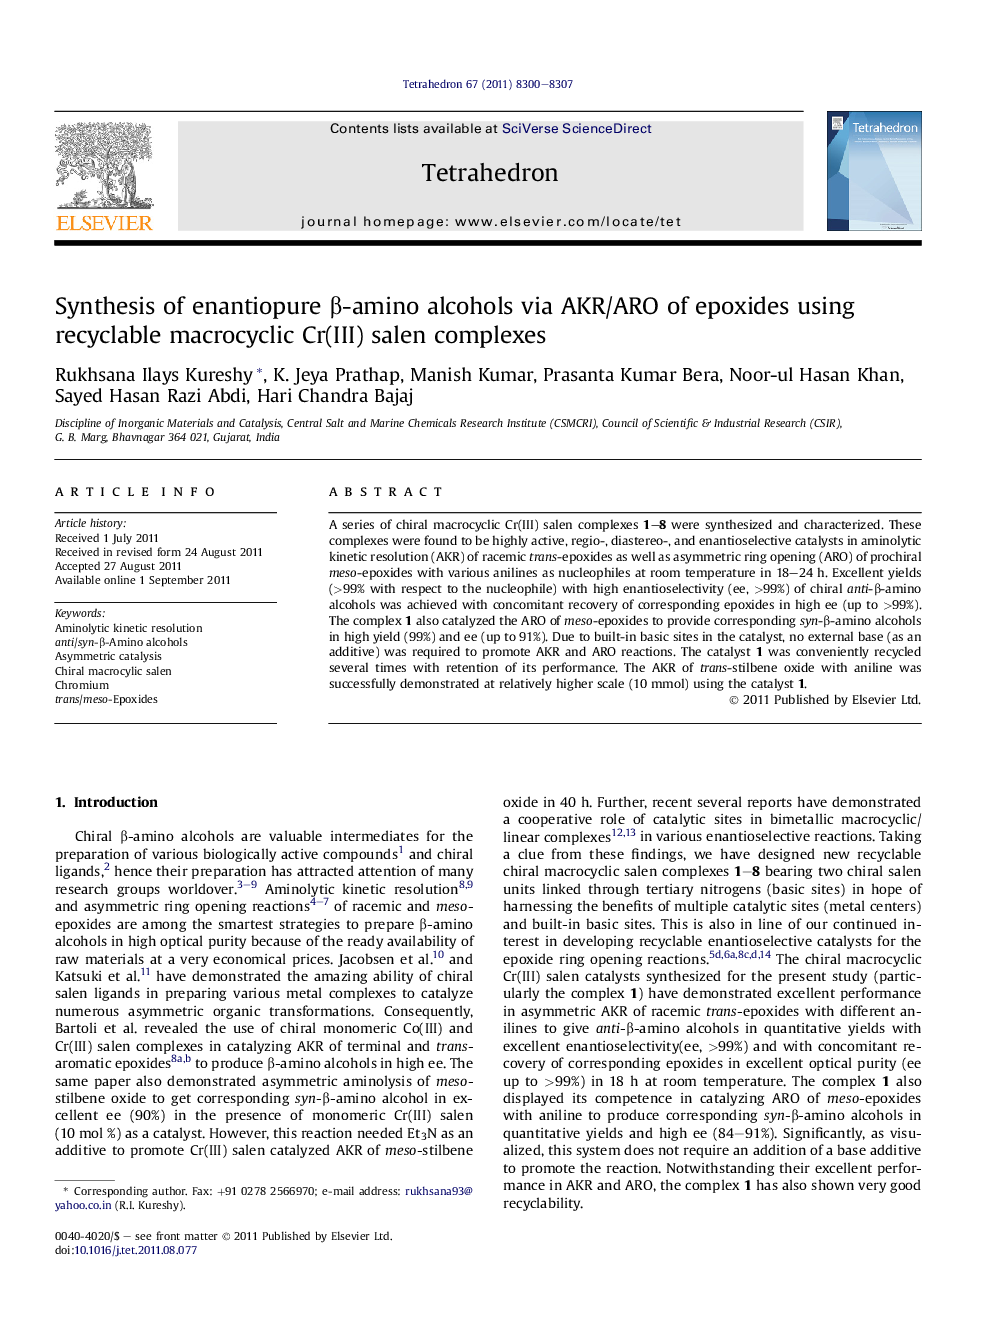 Synthesis of enantiopure Î²-amino alcohols via AKR/ARO of epoxides using recyclable macrocyclic Cr(III) salen complexes